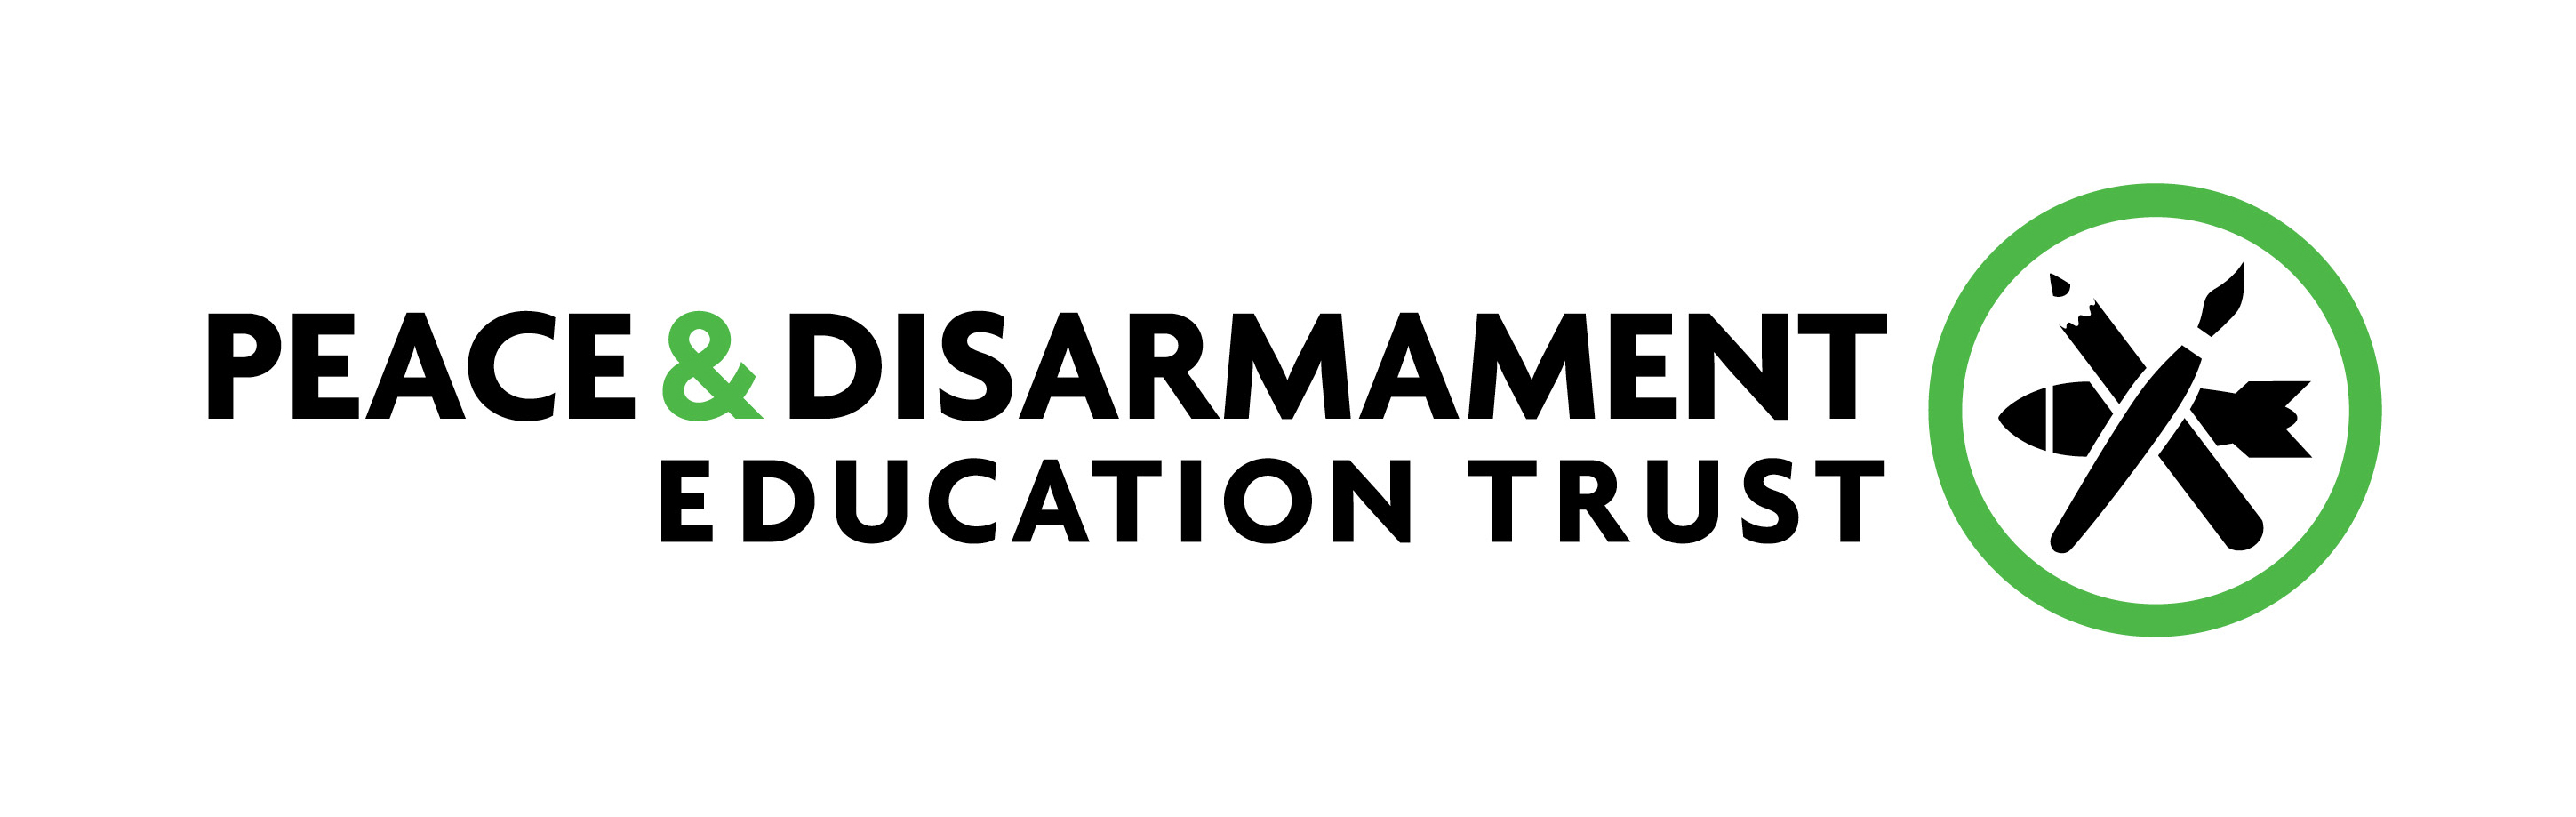 Peace and Disarmament Education Trust logo